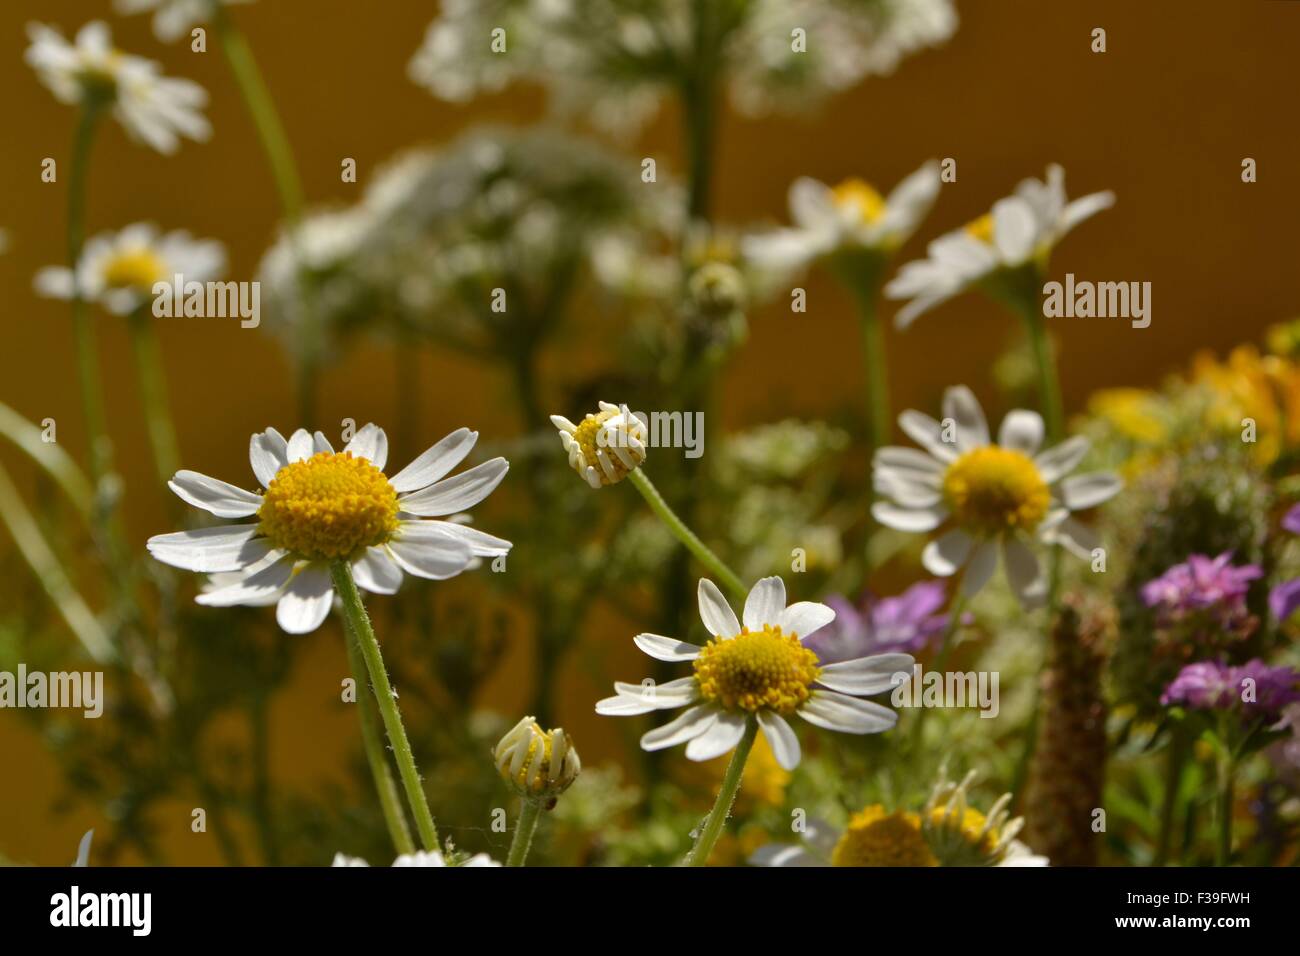 Wildflowers,daisies,flowers,colorful flowers,various flowers Stock Photo